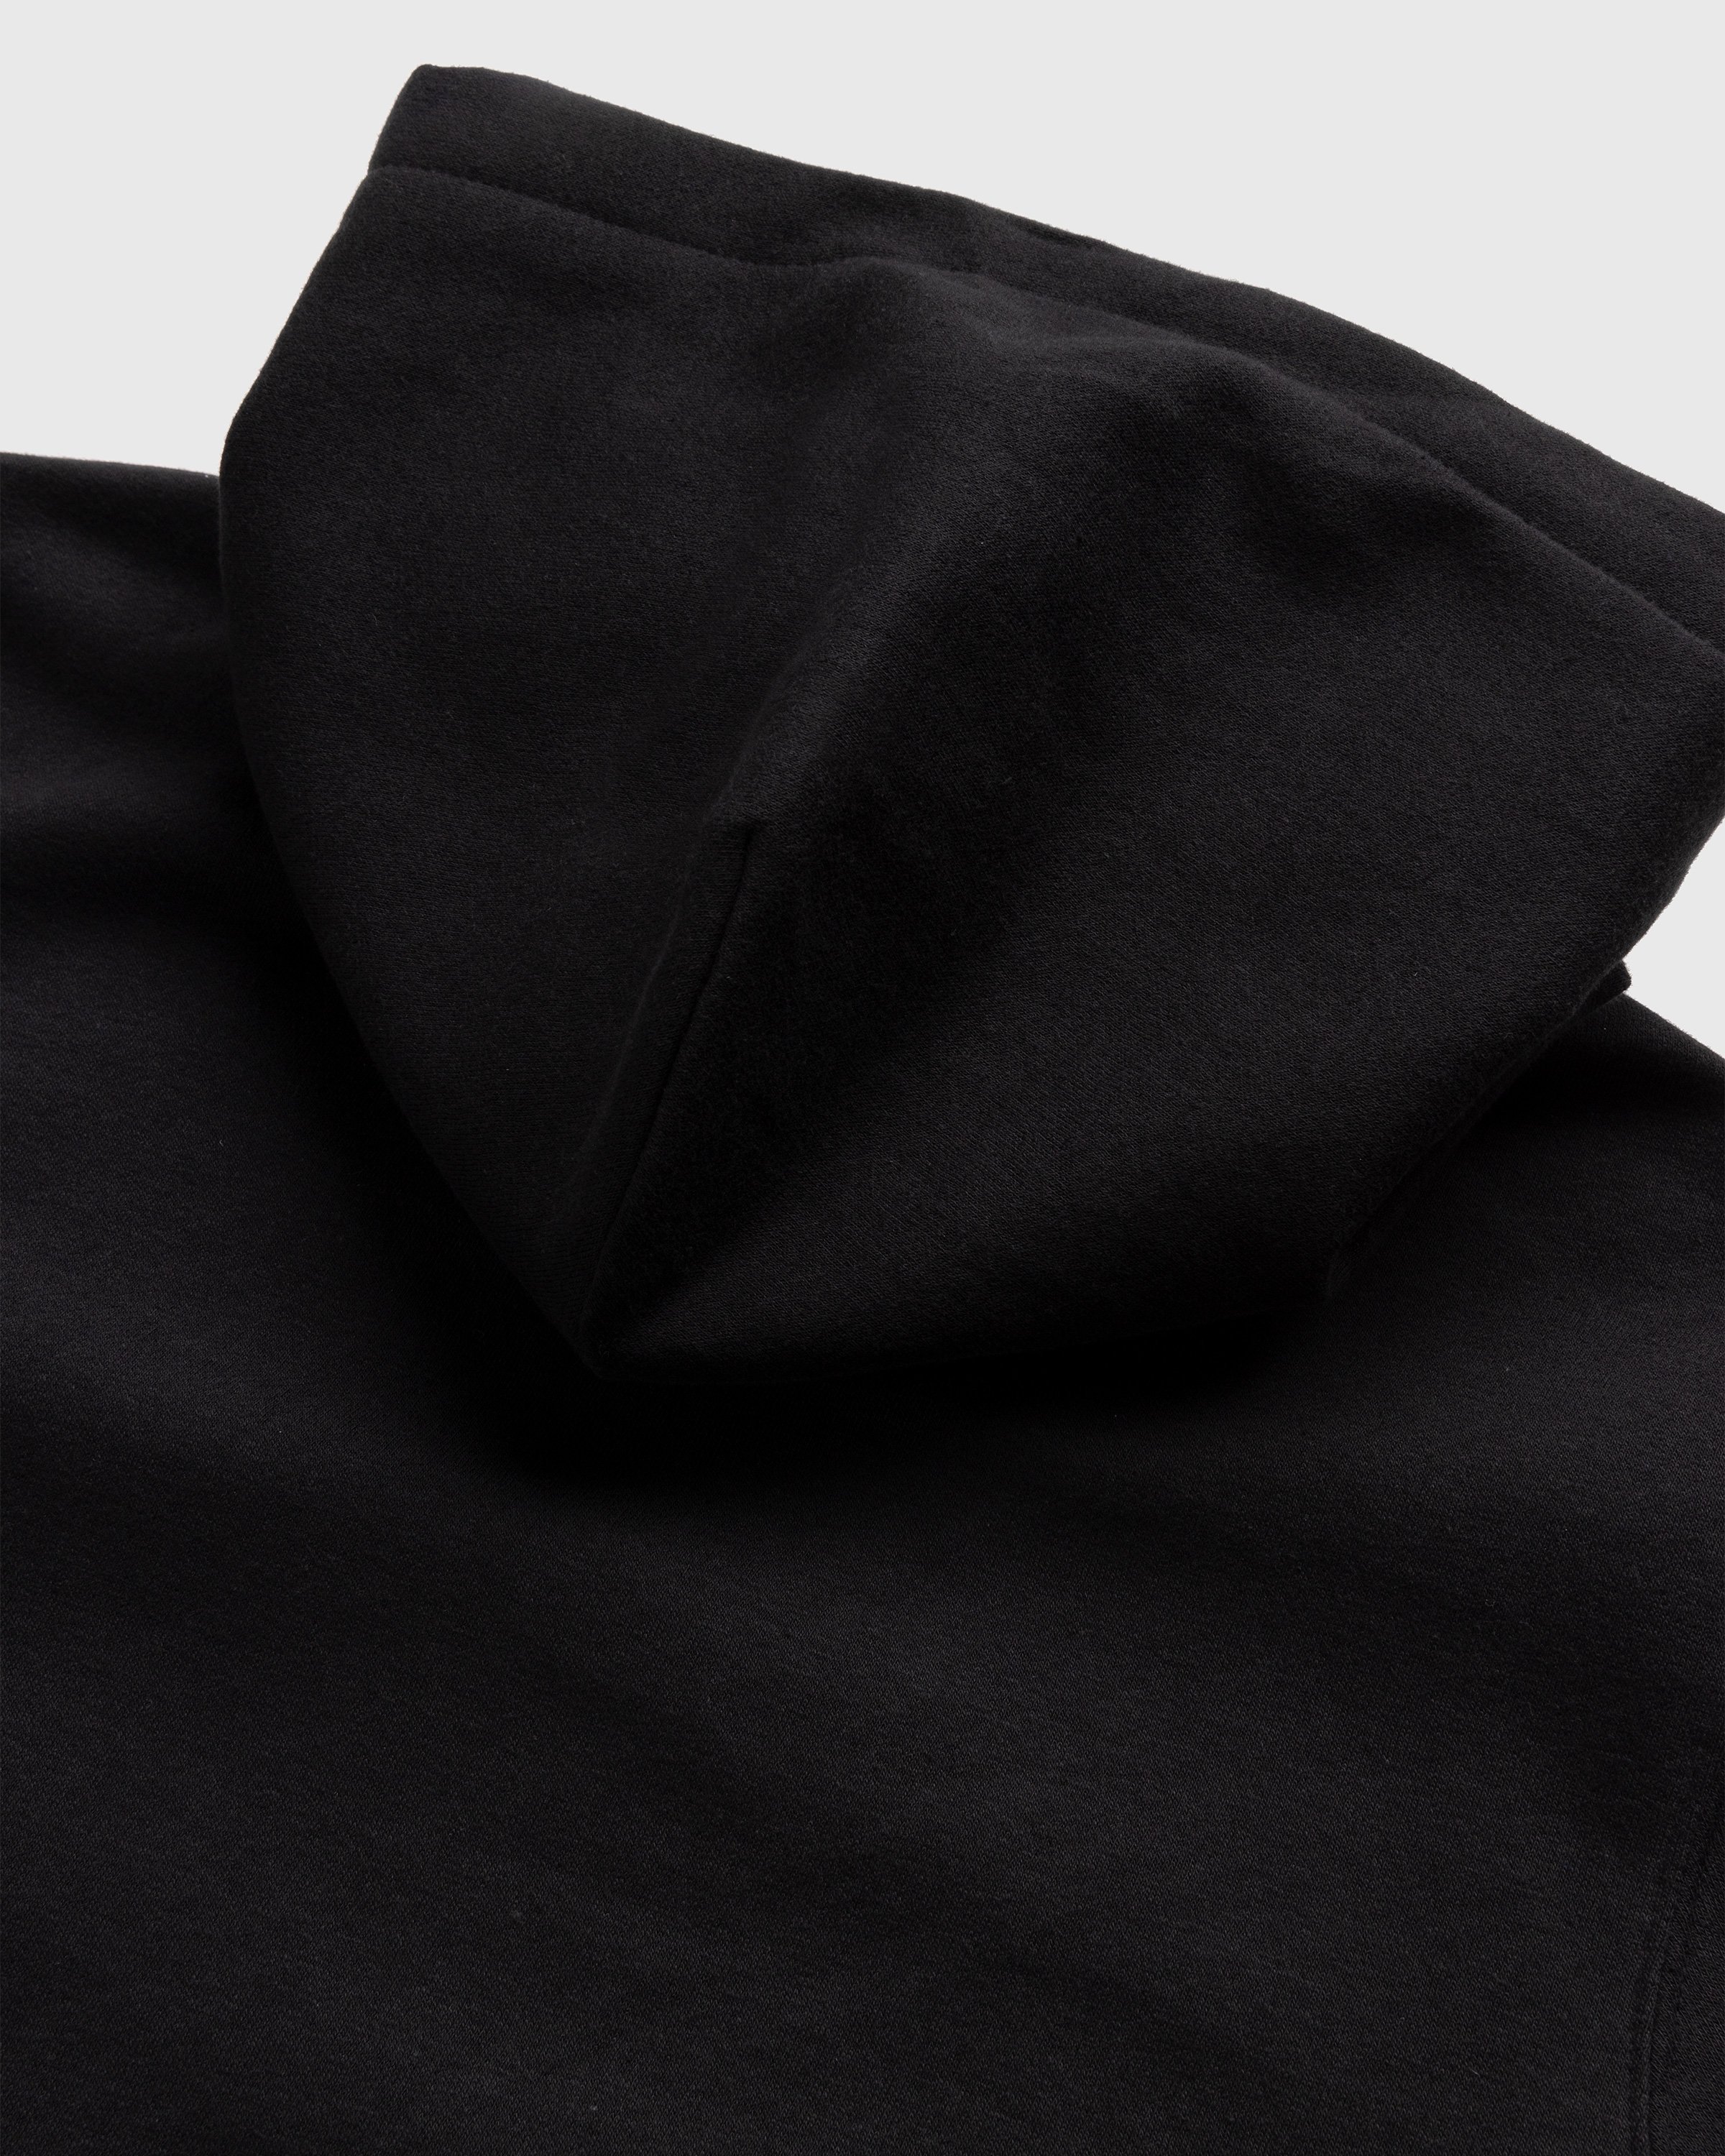 Ralph Lauren x Fortnite - Long Sleeve Sweatshirt Black - Clothing - Black - Image 4